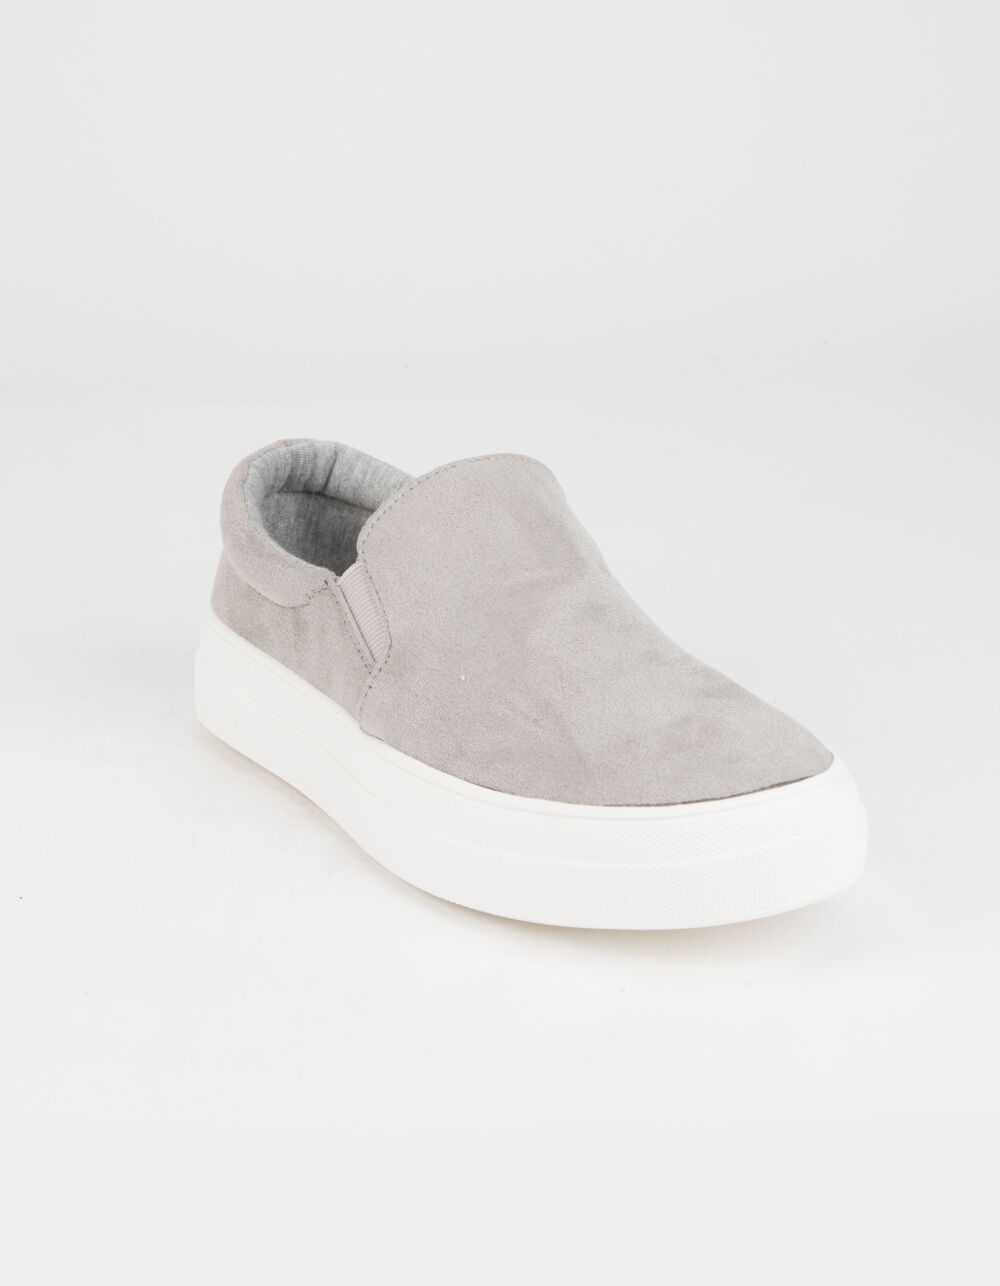 SODA Platform Womens Gray Slip-On Shoes - GRAY | Tillys